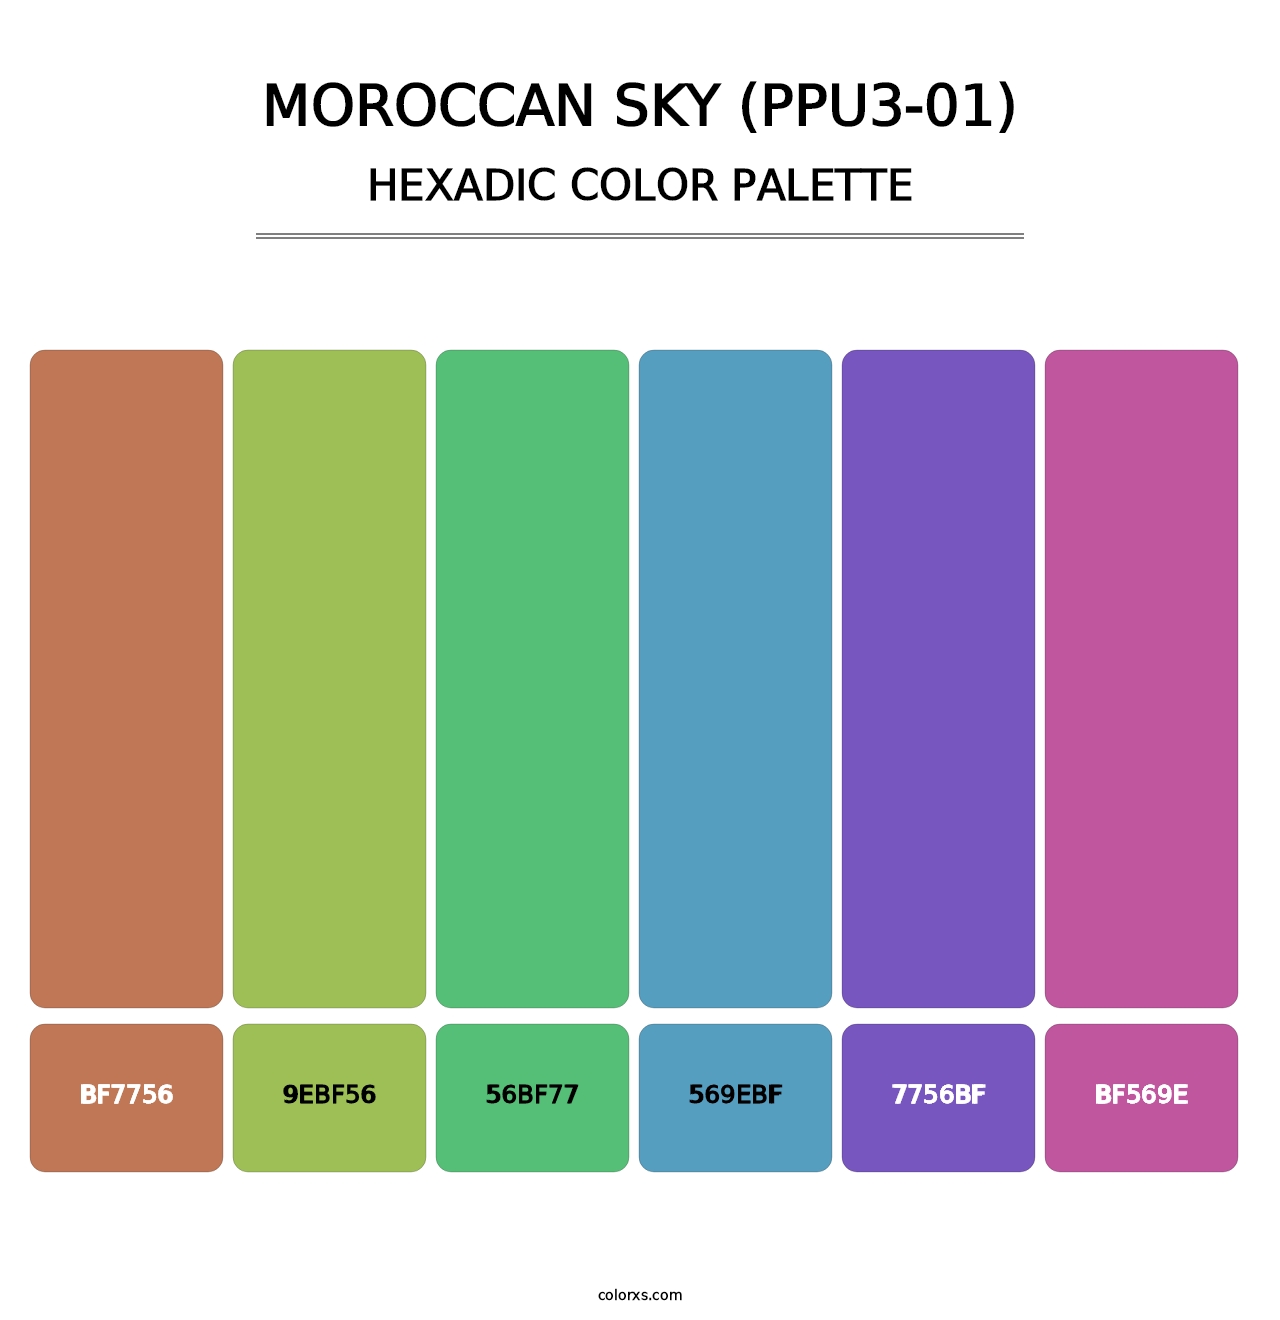 Moroccan Sky (PPU3-01) - Hexadic Color Palette